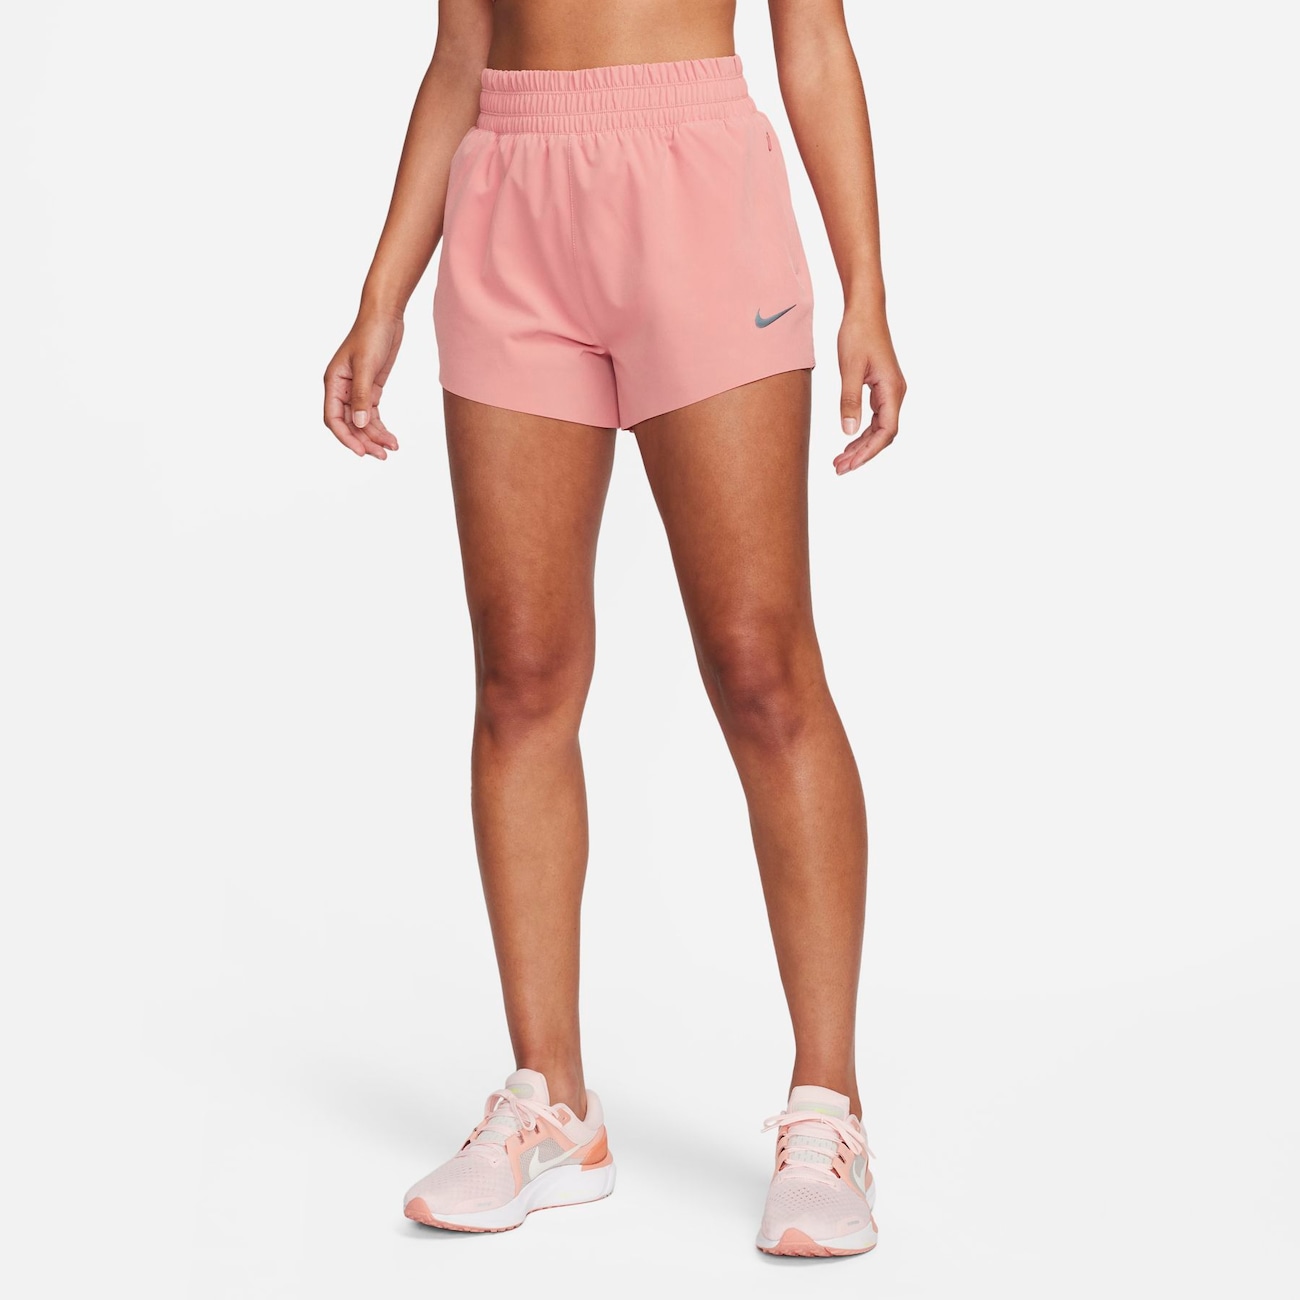 Nike Dri-FIT Running Division Pantalón corto de running de 8 cm con malla interior, talle alto y bolsillos - Mujer - Rosa